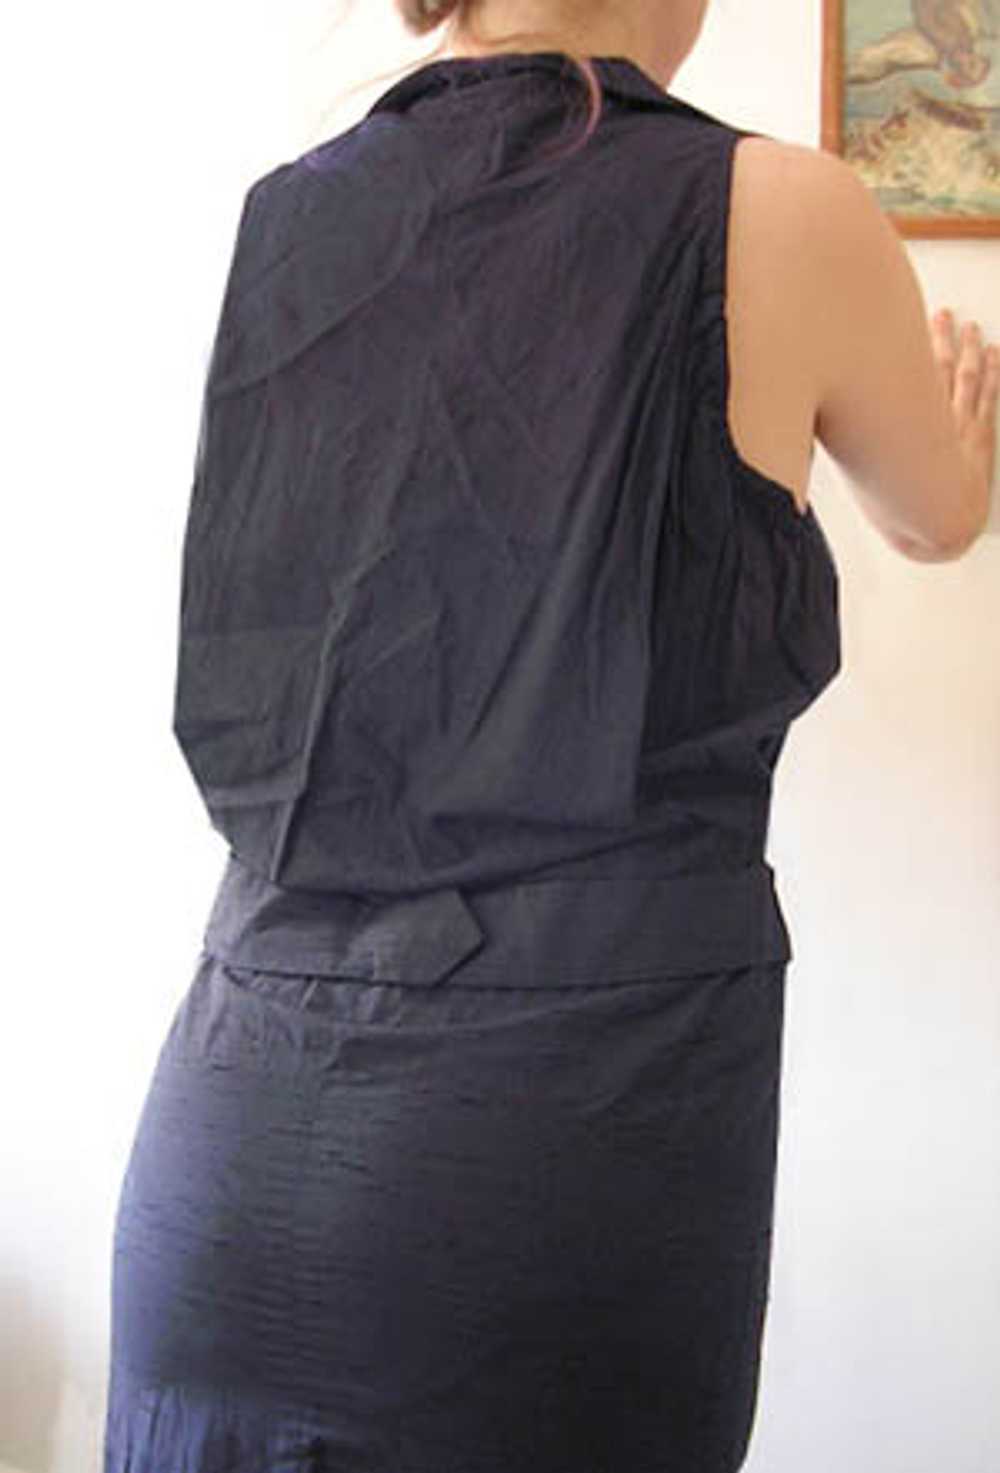 Balenciaga-inspired sack dress - image 5